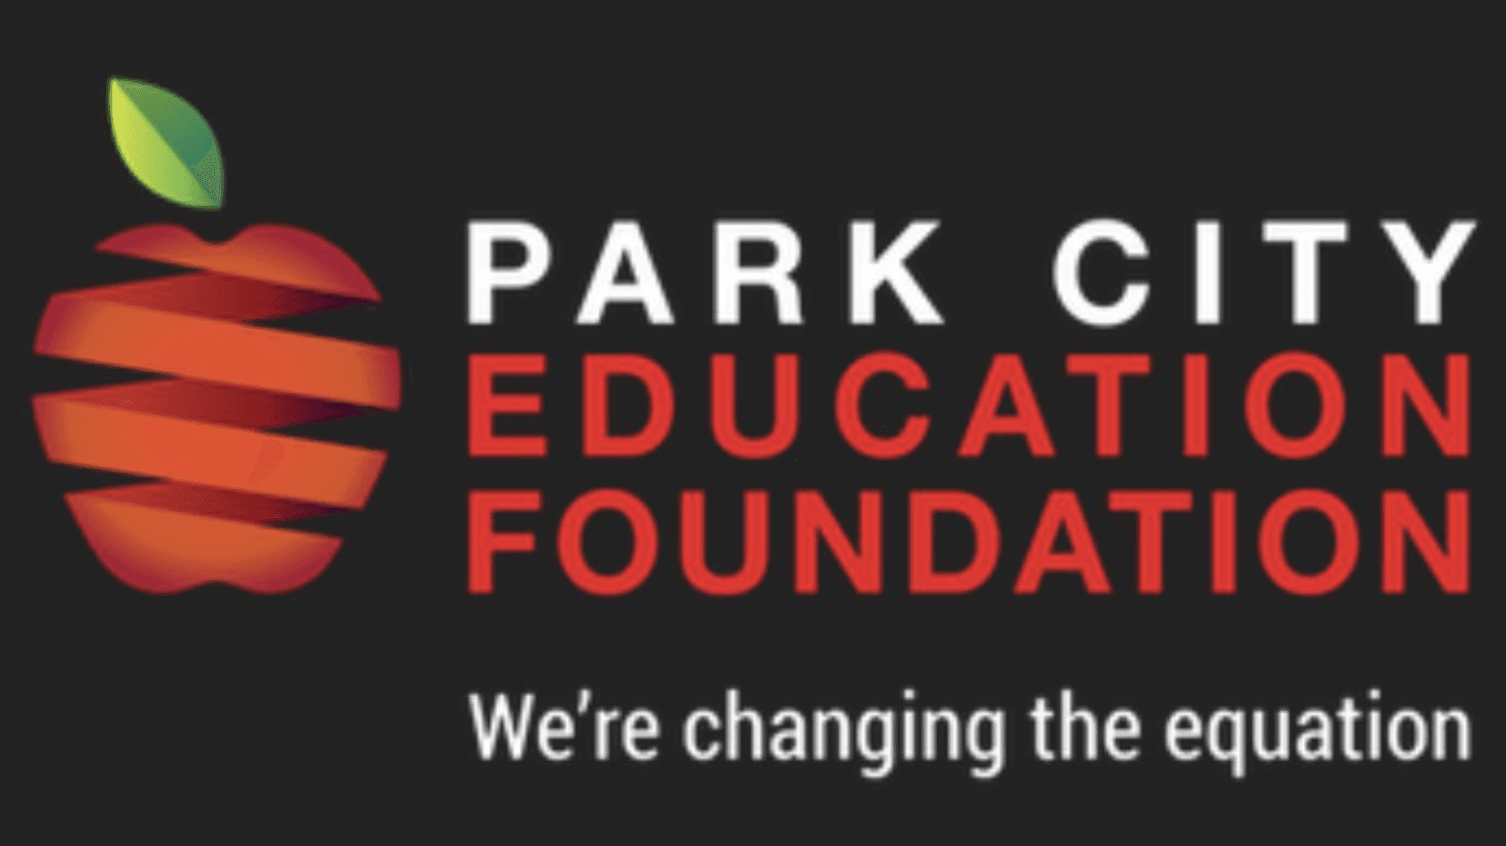 Park City Mountain pledges $250,000 to the Park City Education Foundation